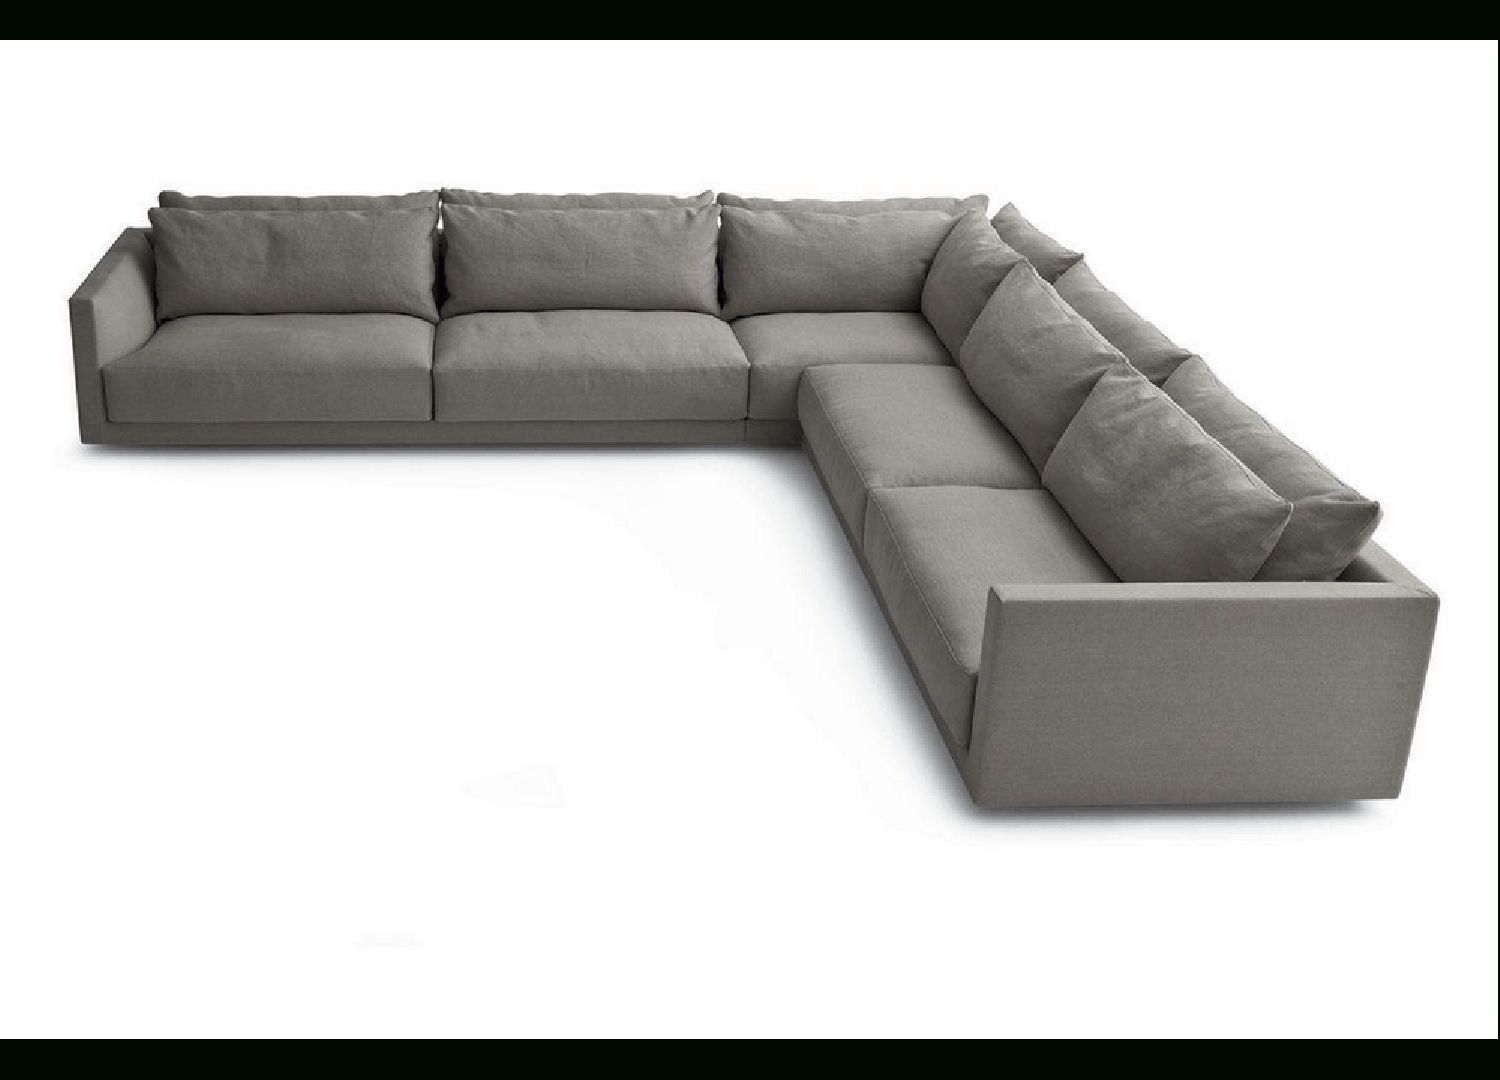 Poliform Bristol Sofa | Sofas | Est Living Product Library With Bristol Sofas (View 2 of 15)